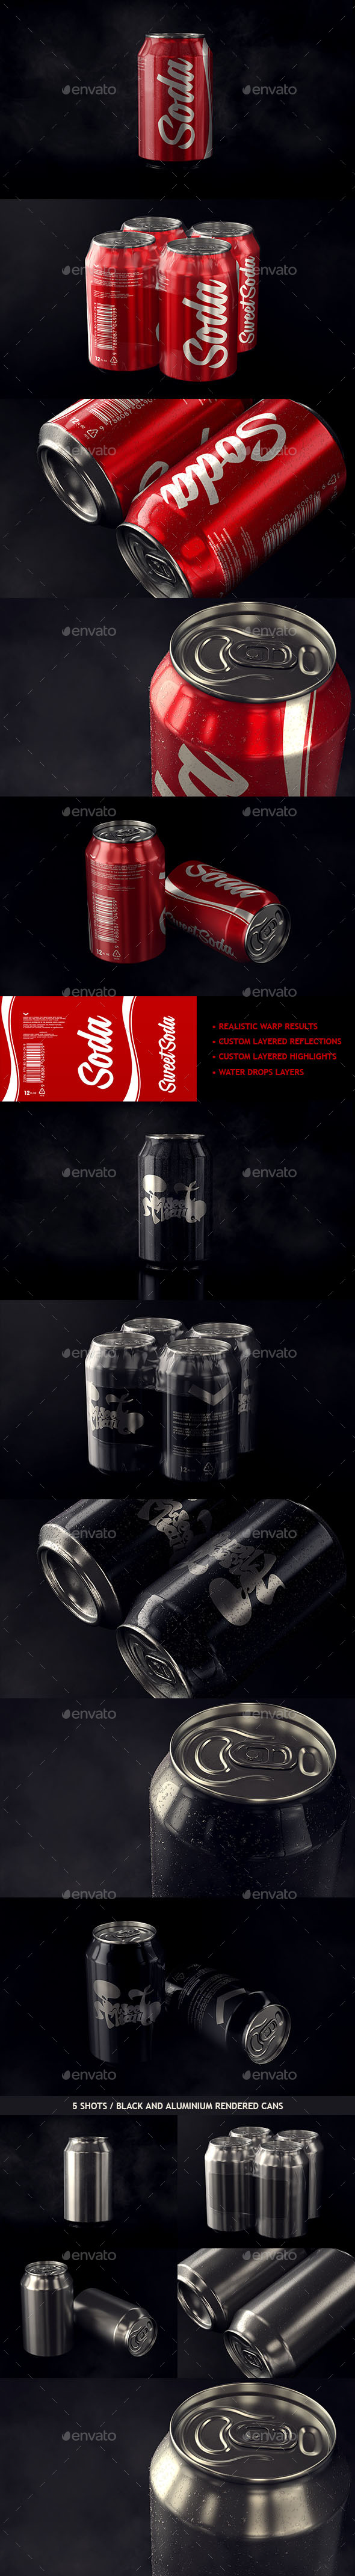 Download Photorealistic Aluminum Soda Can Mockup by bangingjoints ...